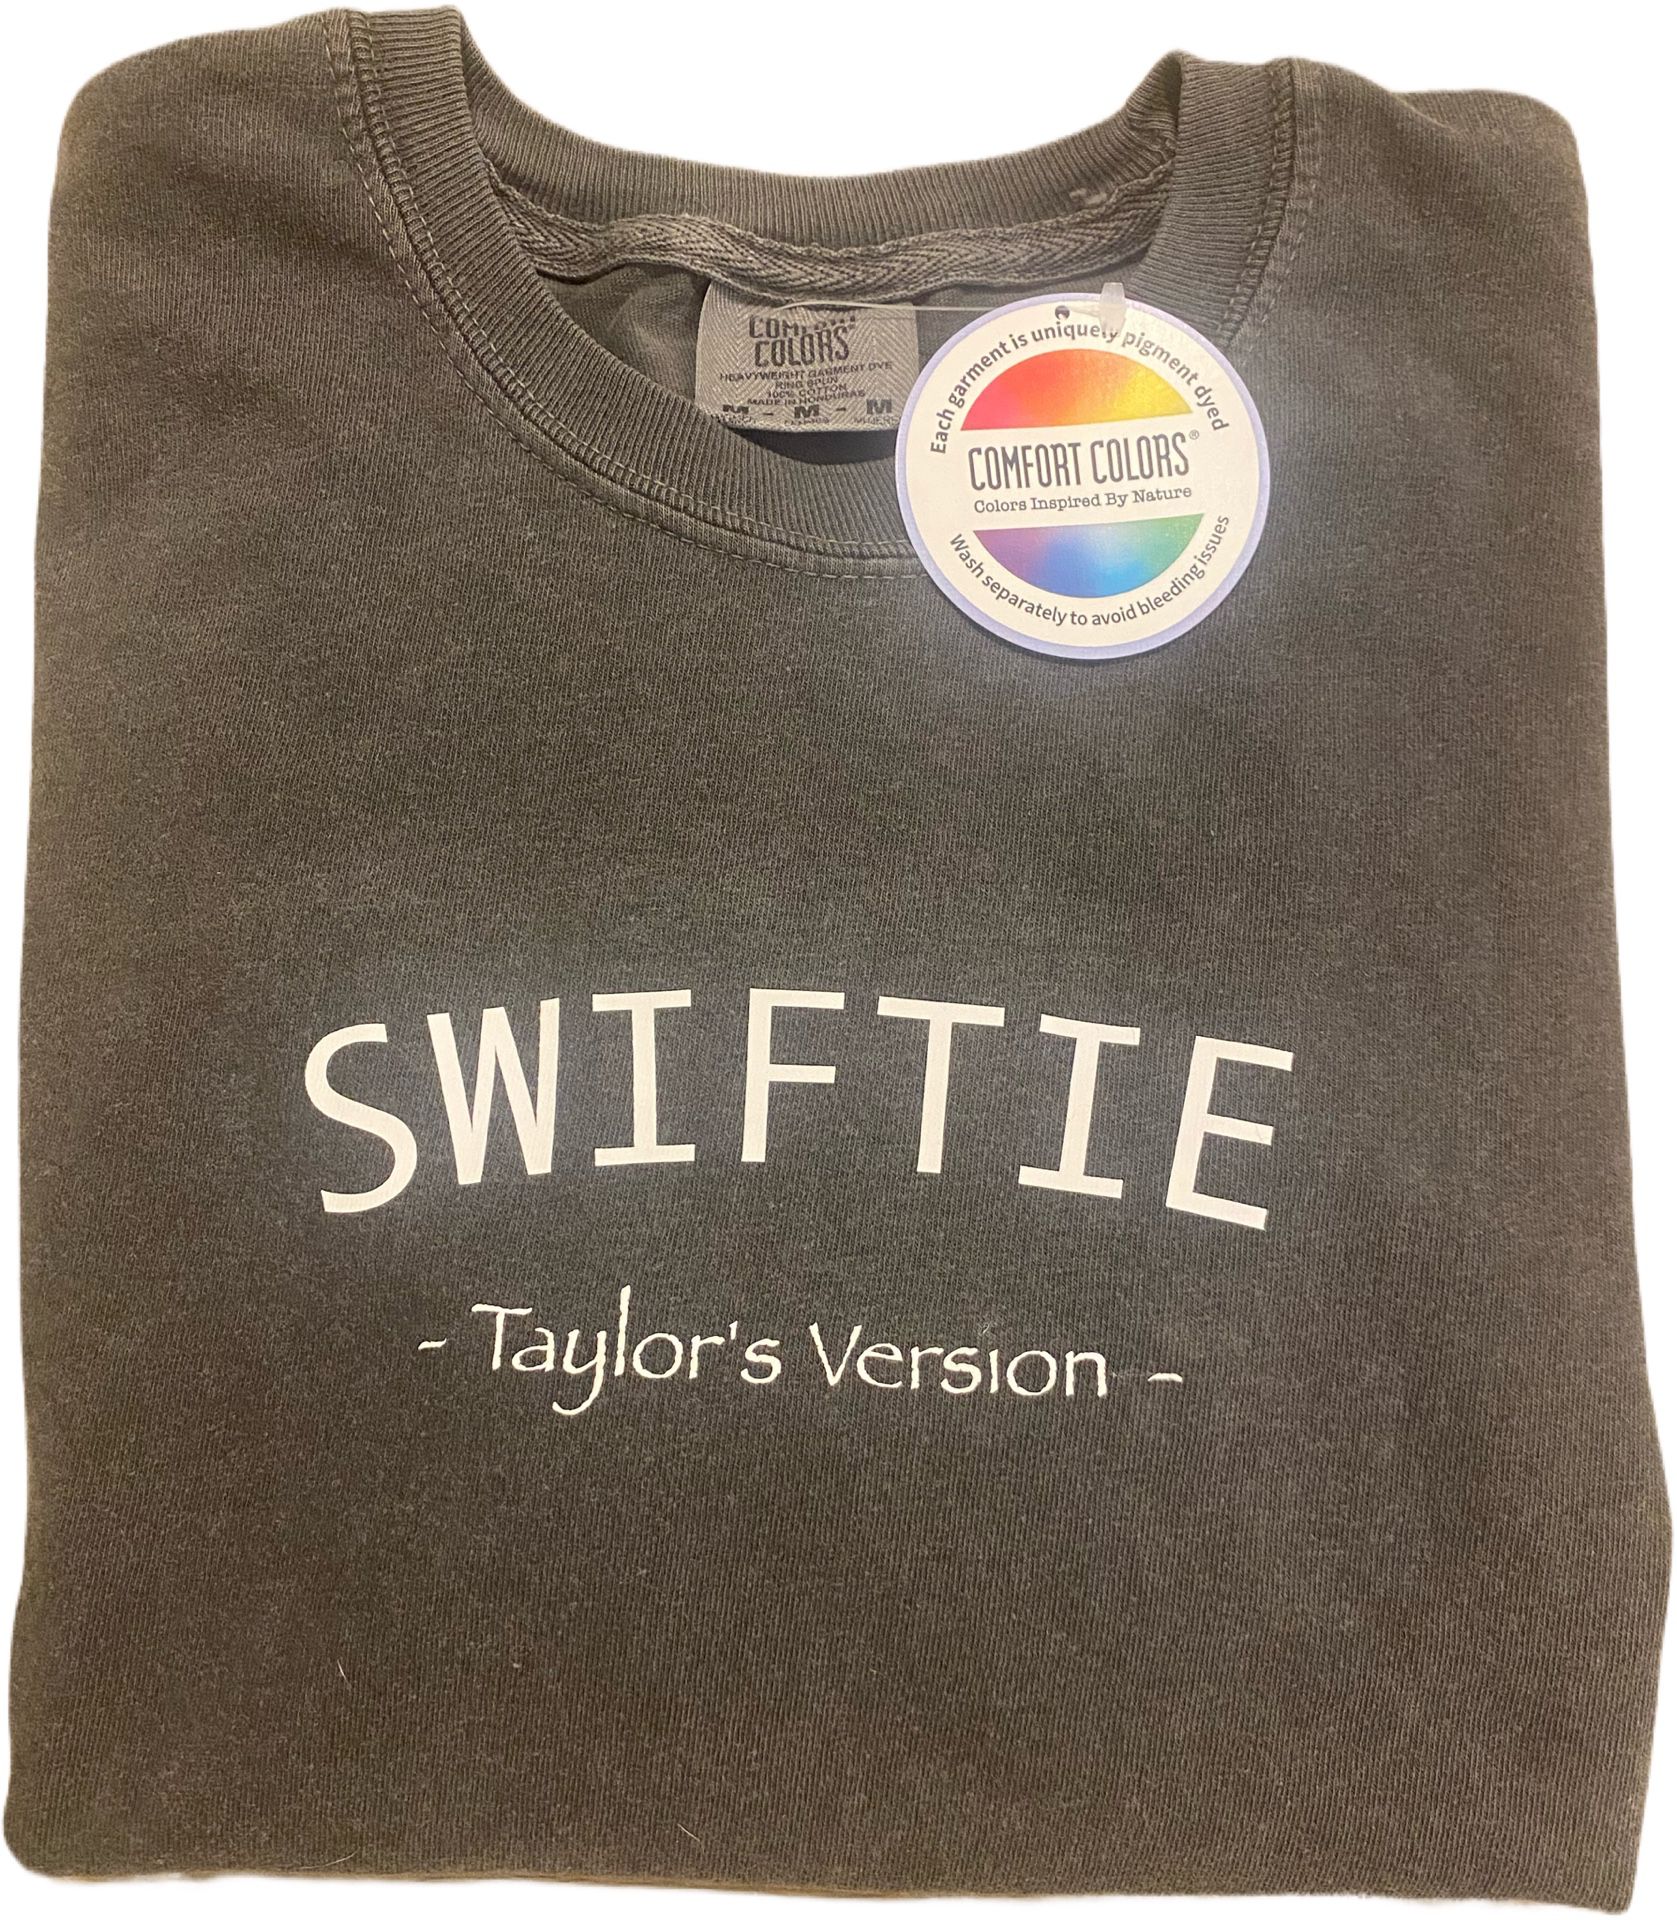 Taylor Swift “Swiftie” T-Shirt